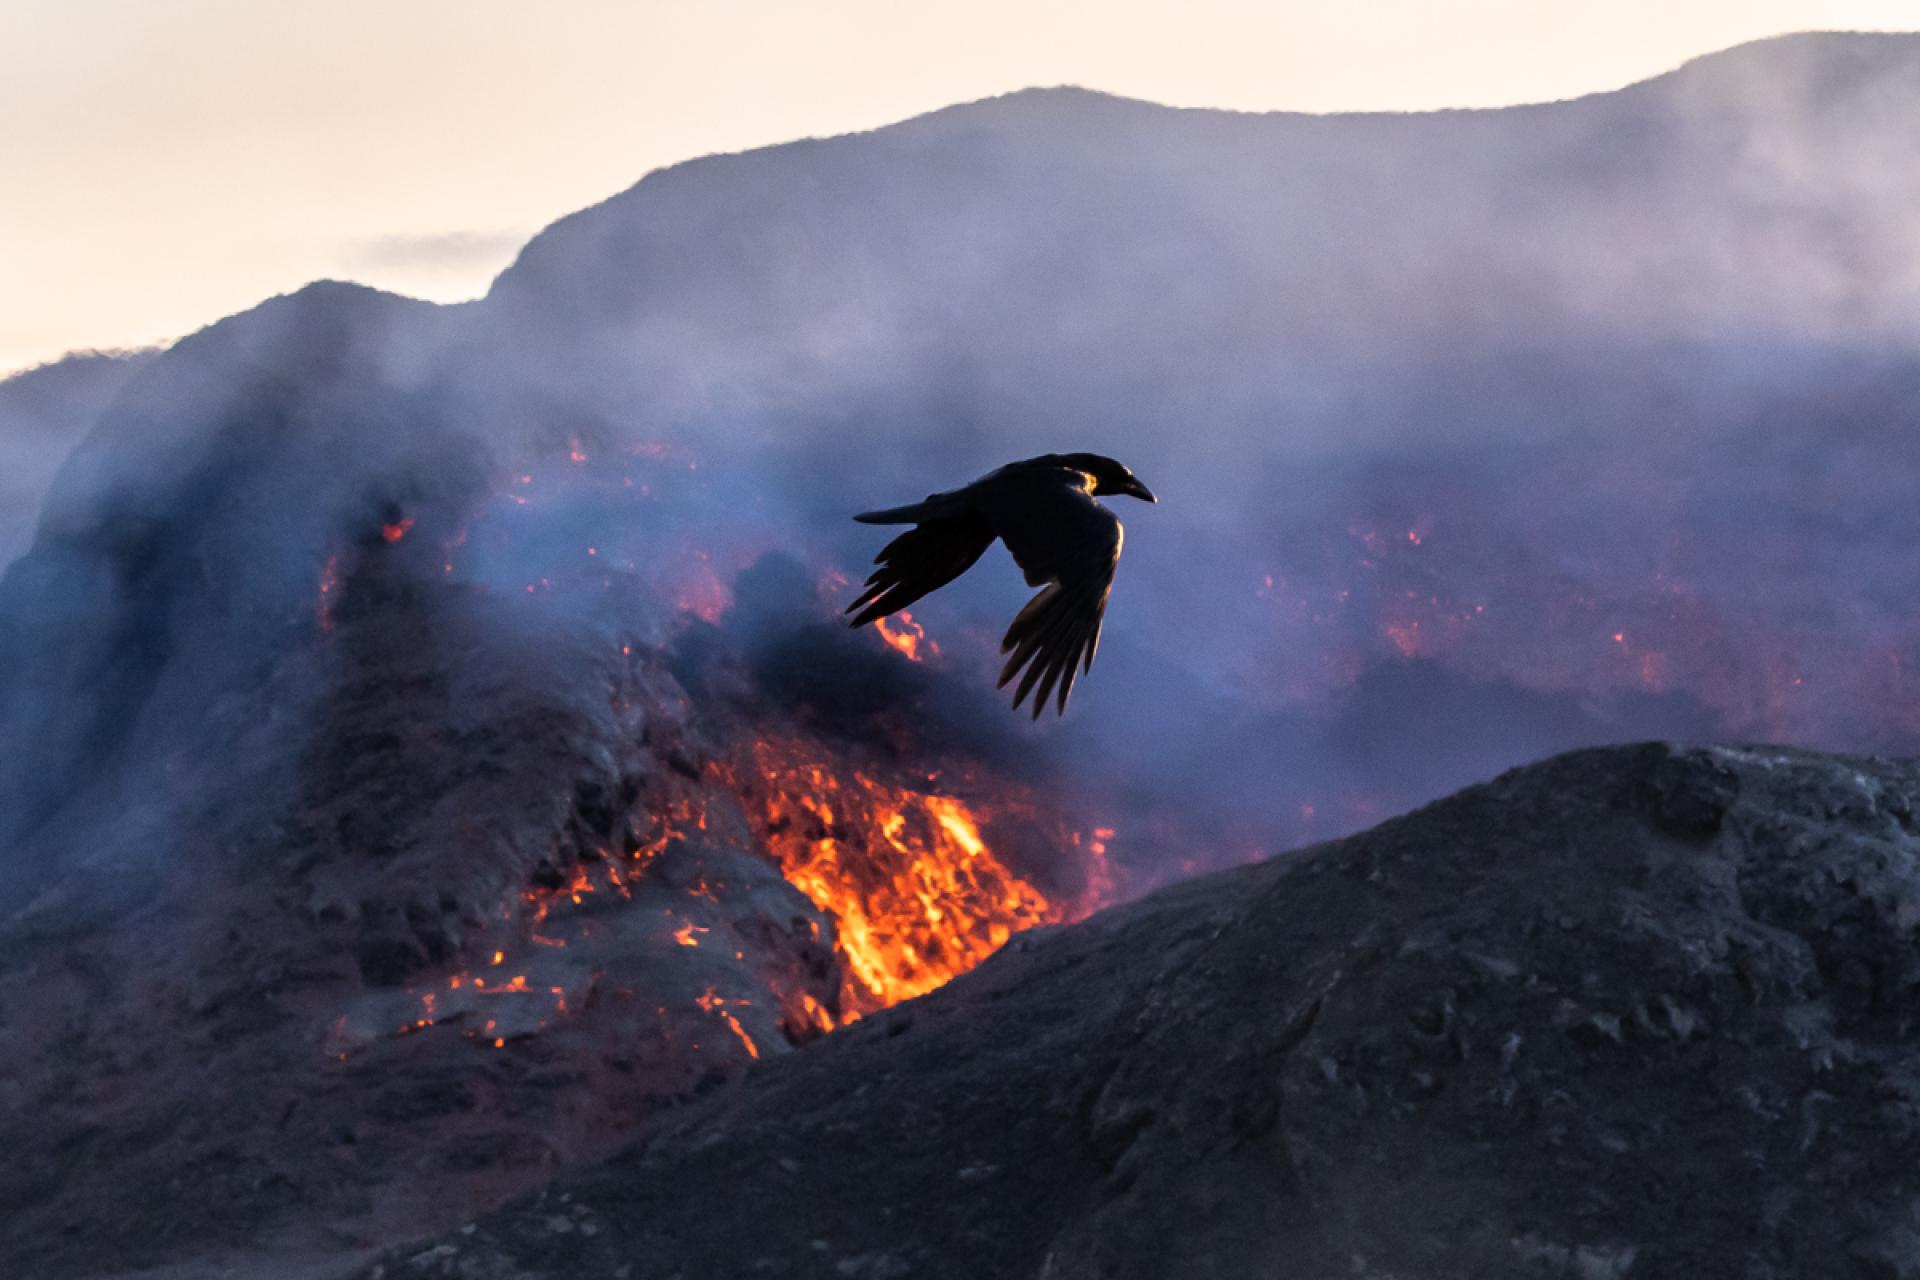 European Photography Awards Winner - Fiery Raven